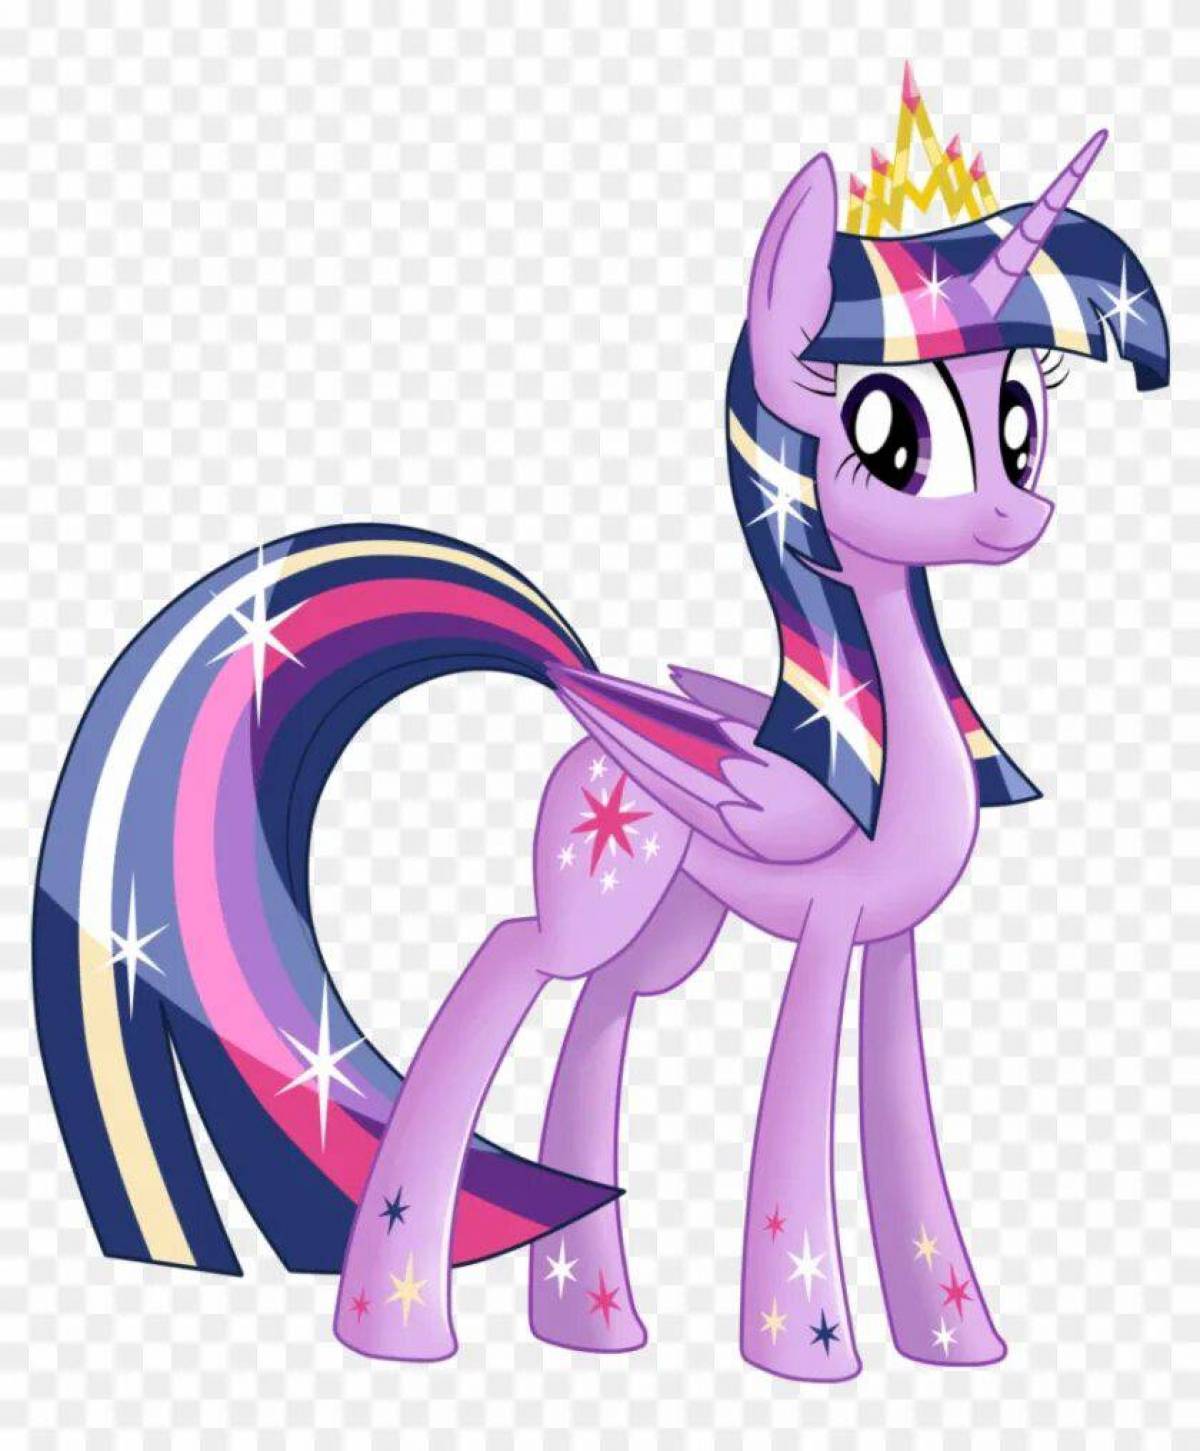 Sparkle pony. Сумеречная Искорка/Твайлайт Спаркл. Твайлайт принцесса Аликорн. Принцесса Твайлайт Спаркл. Твайлайт и Искорка.